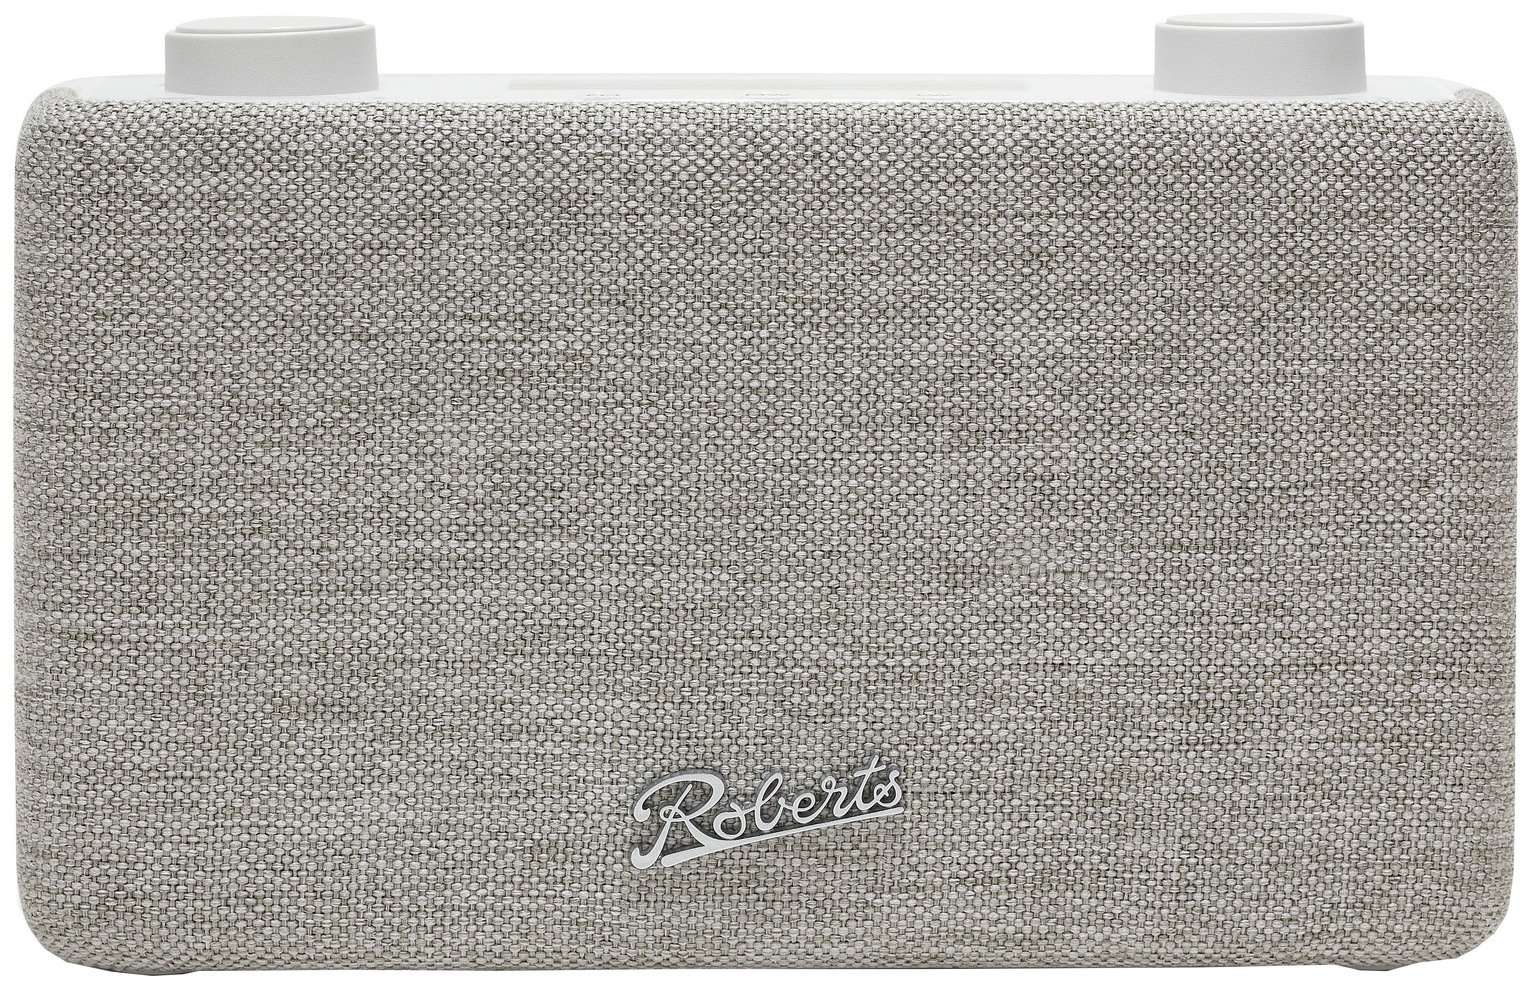 Roberts Play FM Portable Radio - White